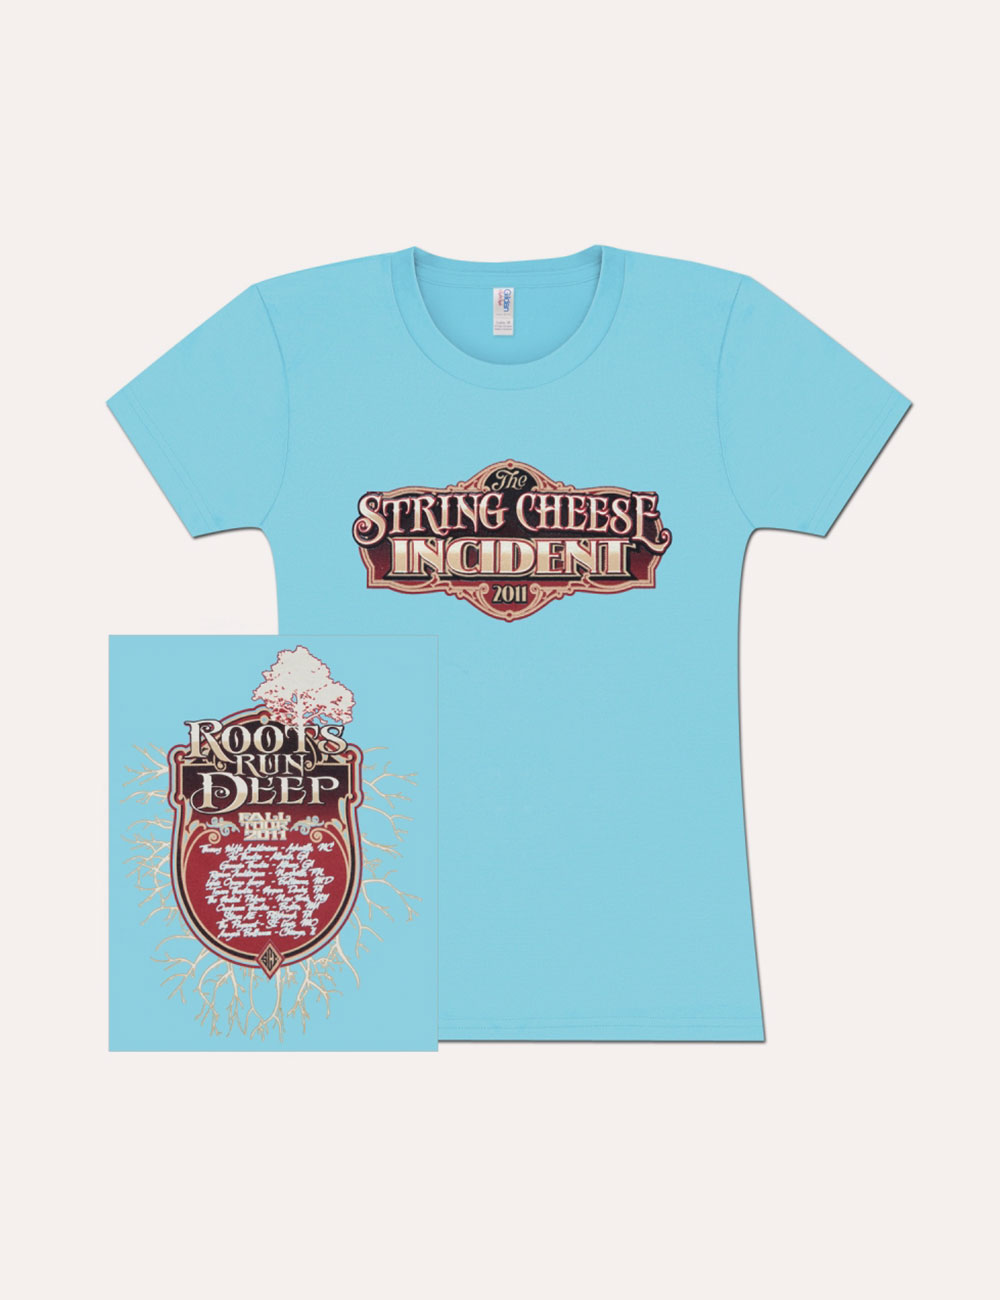 The String Cheese Incident - Merch - T-Shirts - Women's 2011 Fall Tour T-Shirt